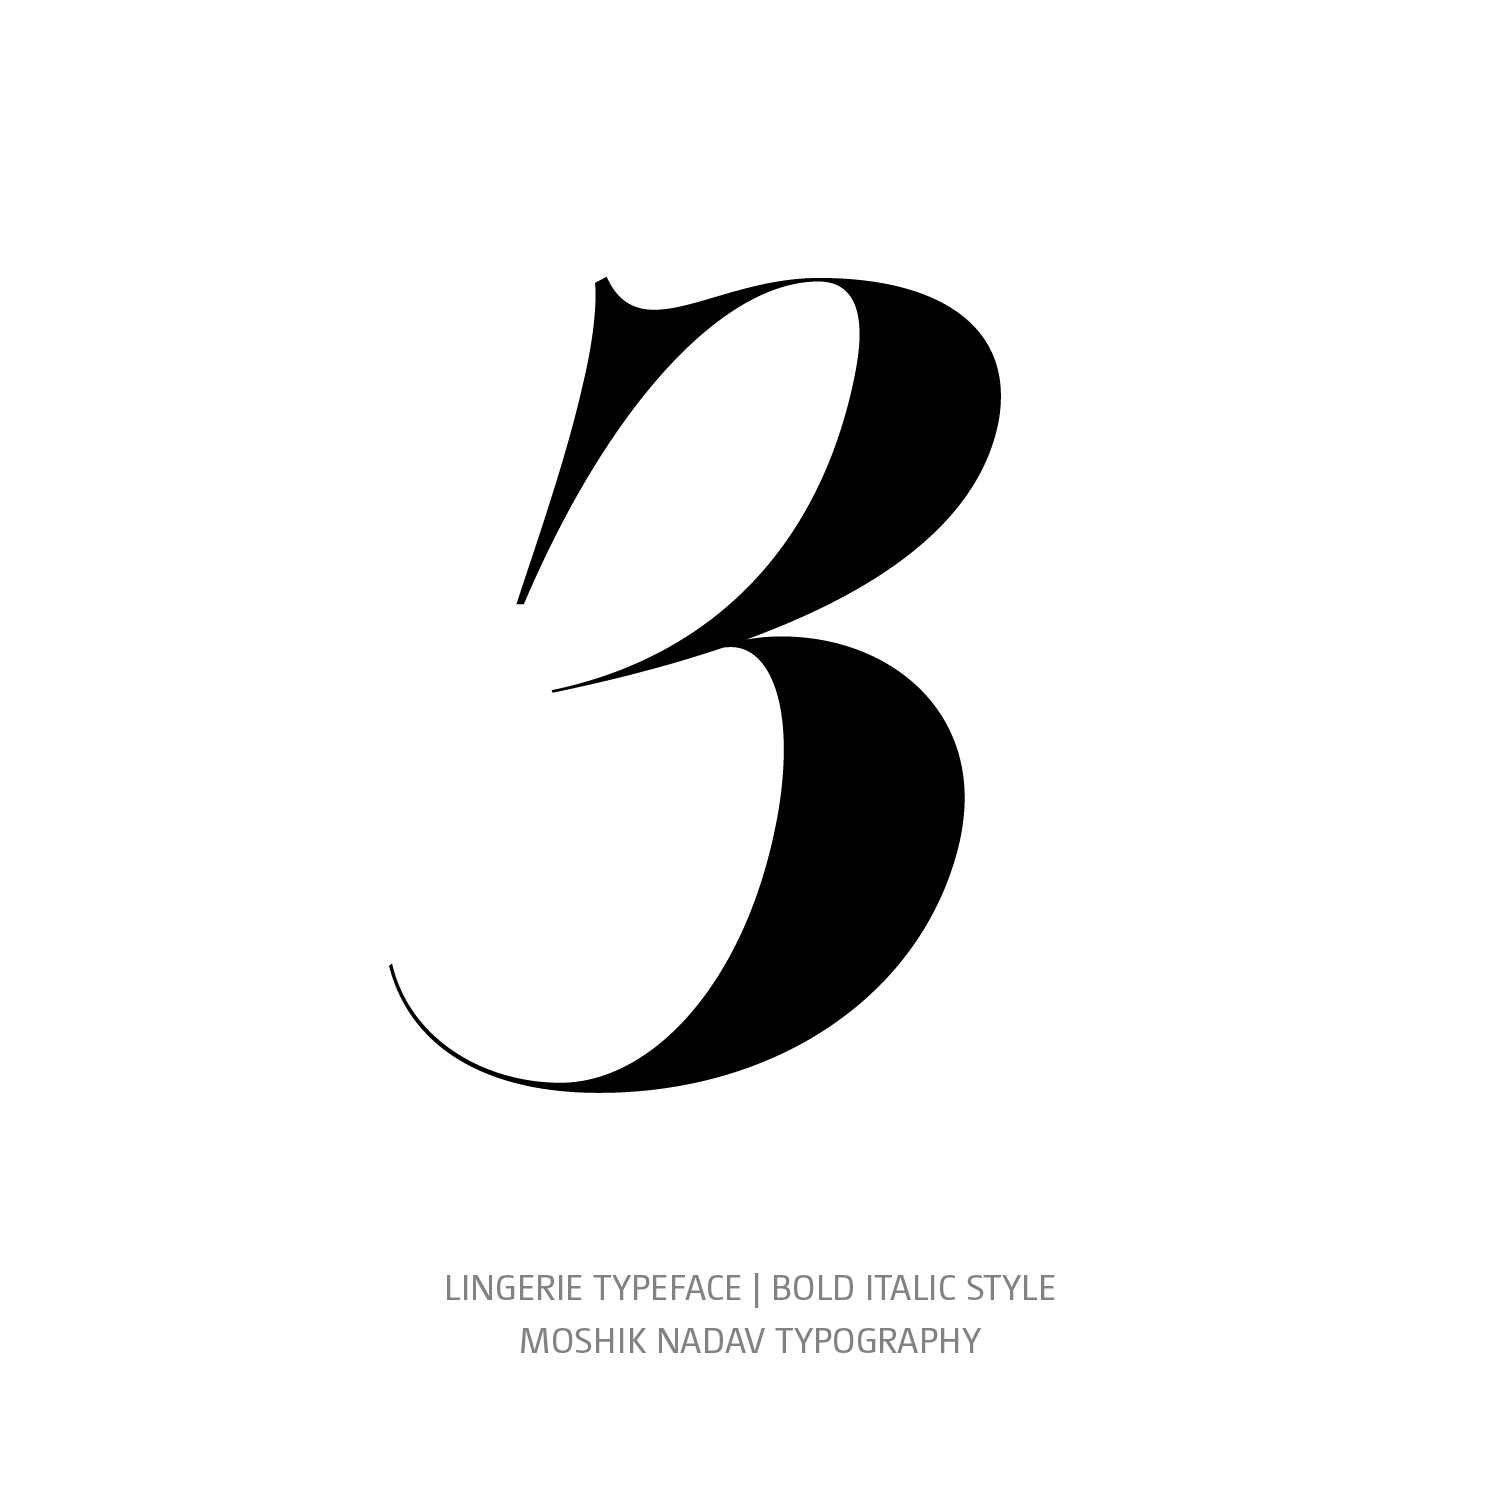 Lingerie Typeface Bold Italic 3